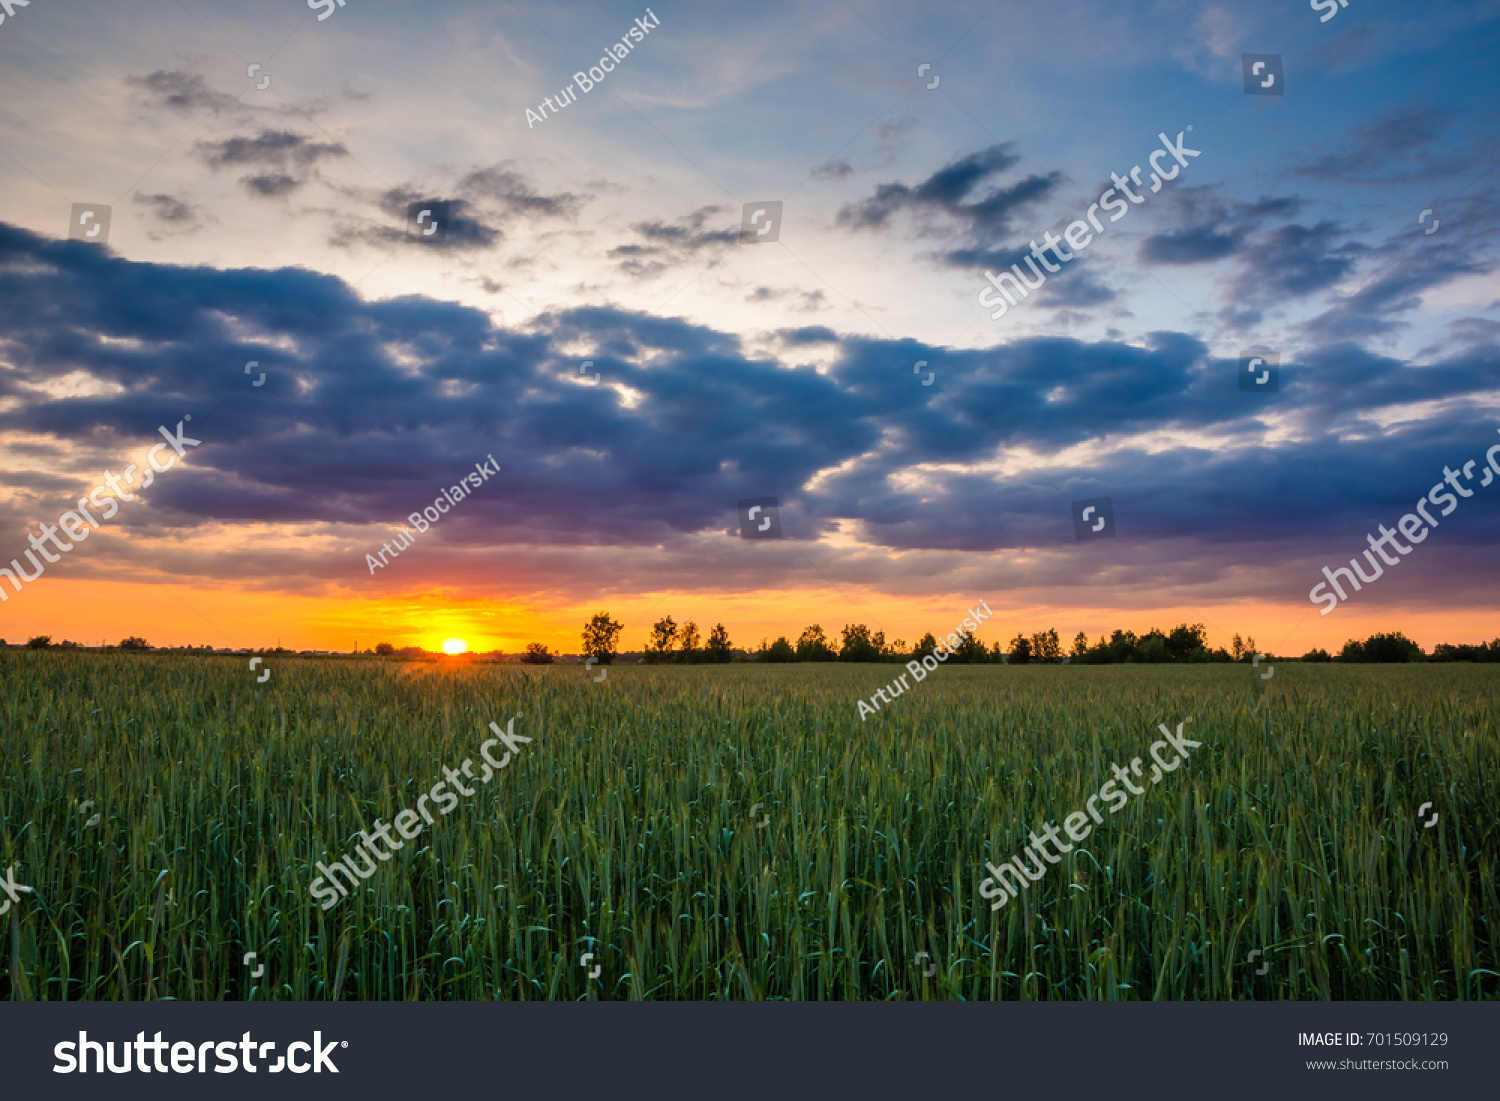 Sunset over wheat field, Poland #701509129